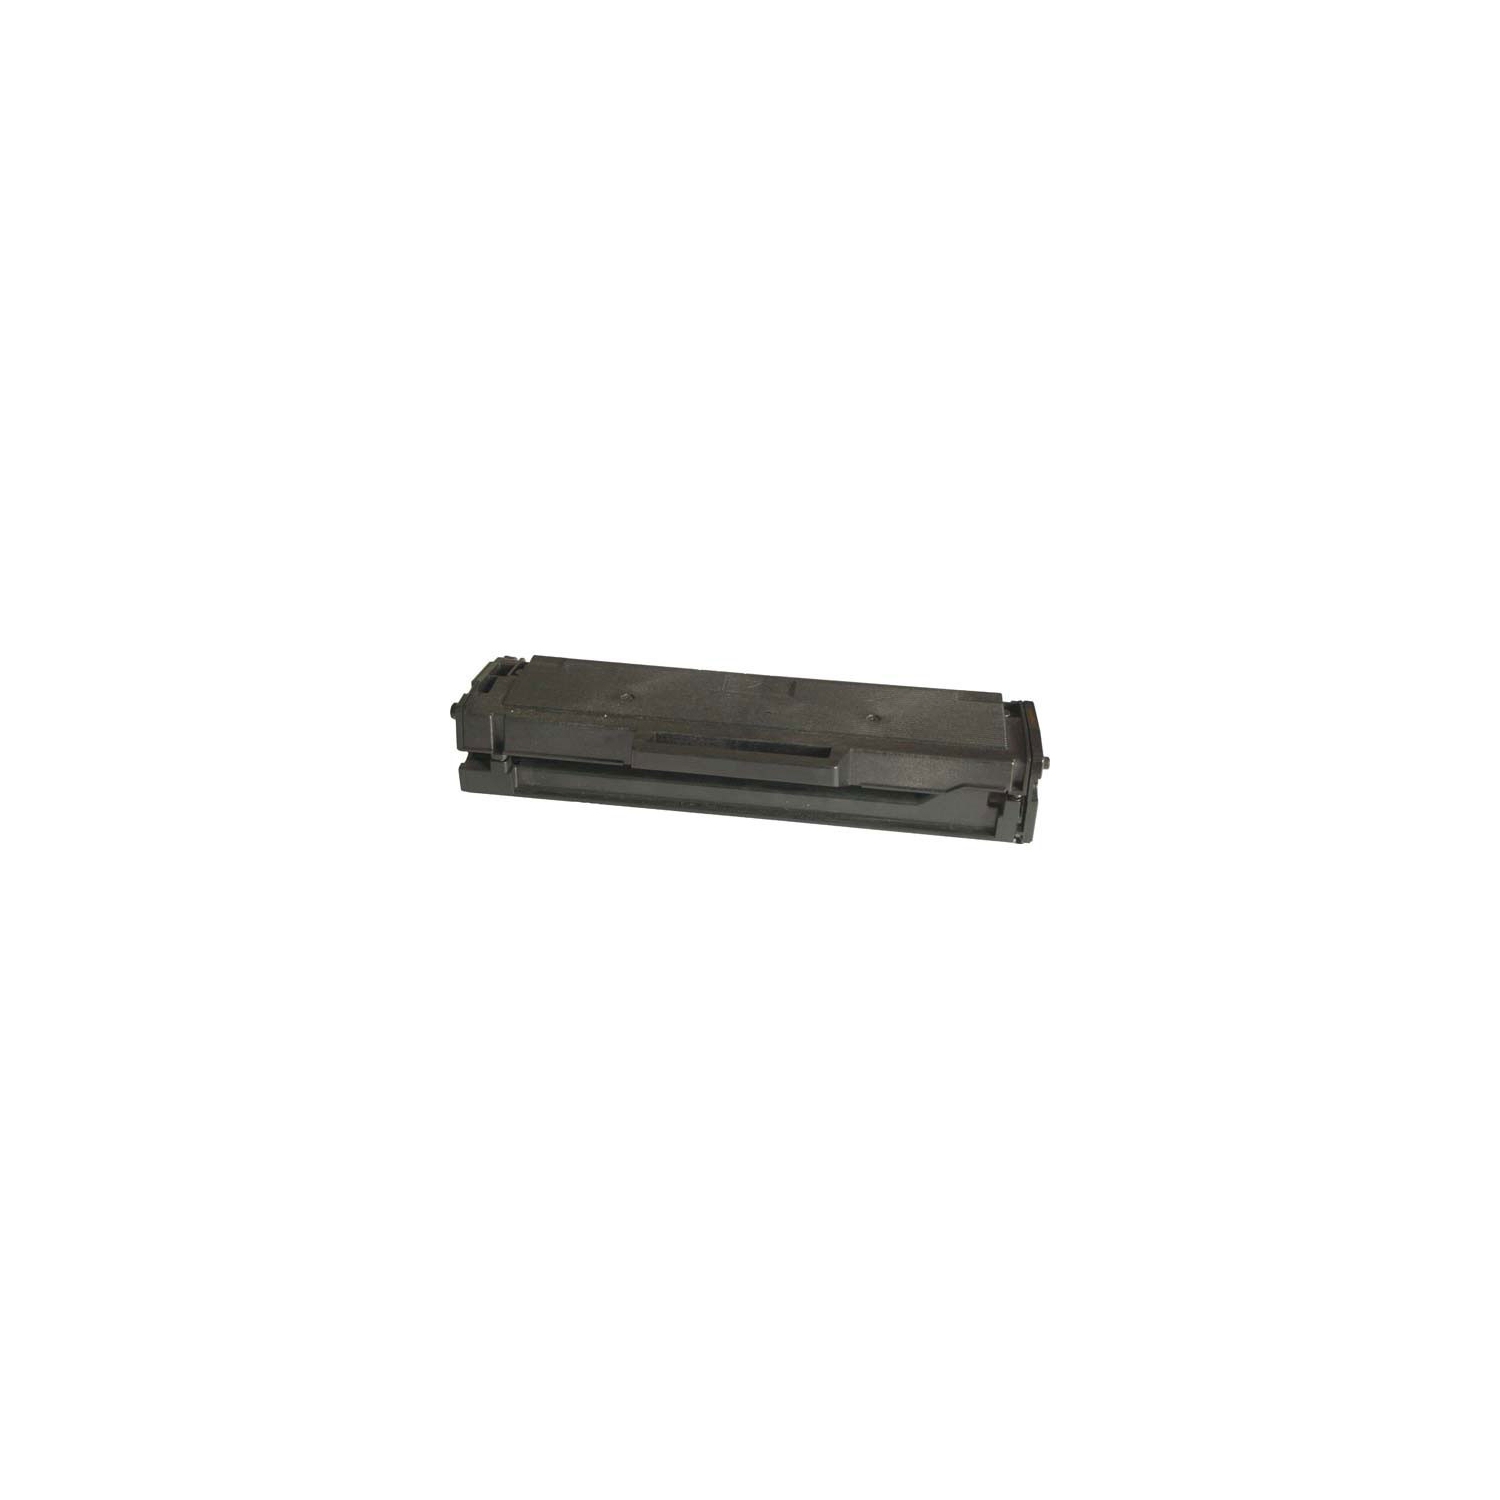 Gotoners™ Generic Packaged Compatible MLT-D111S Black Toner Cartridge for Samsung SL-M2020W SL-M2070FW Xpress M2020W Xpress M2070FW